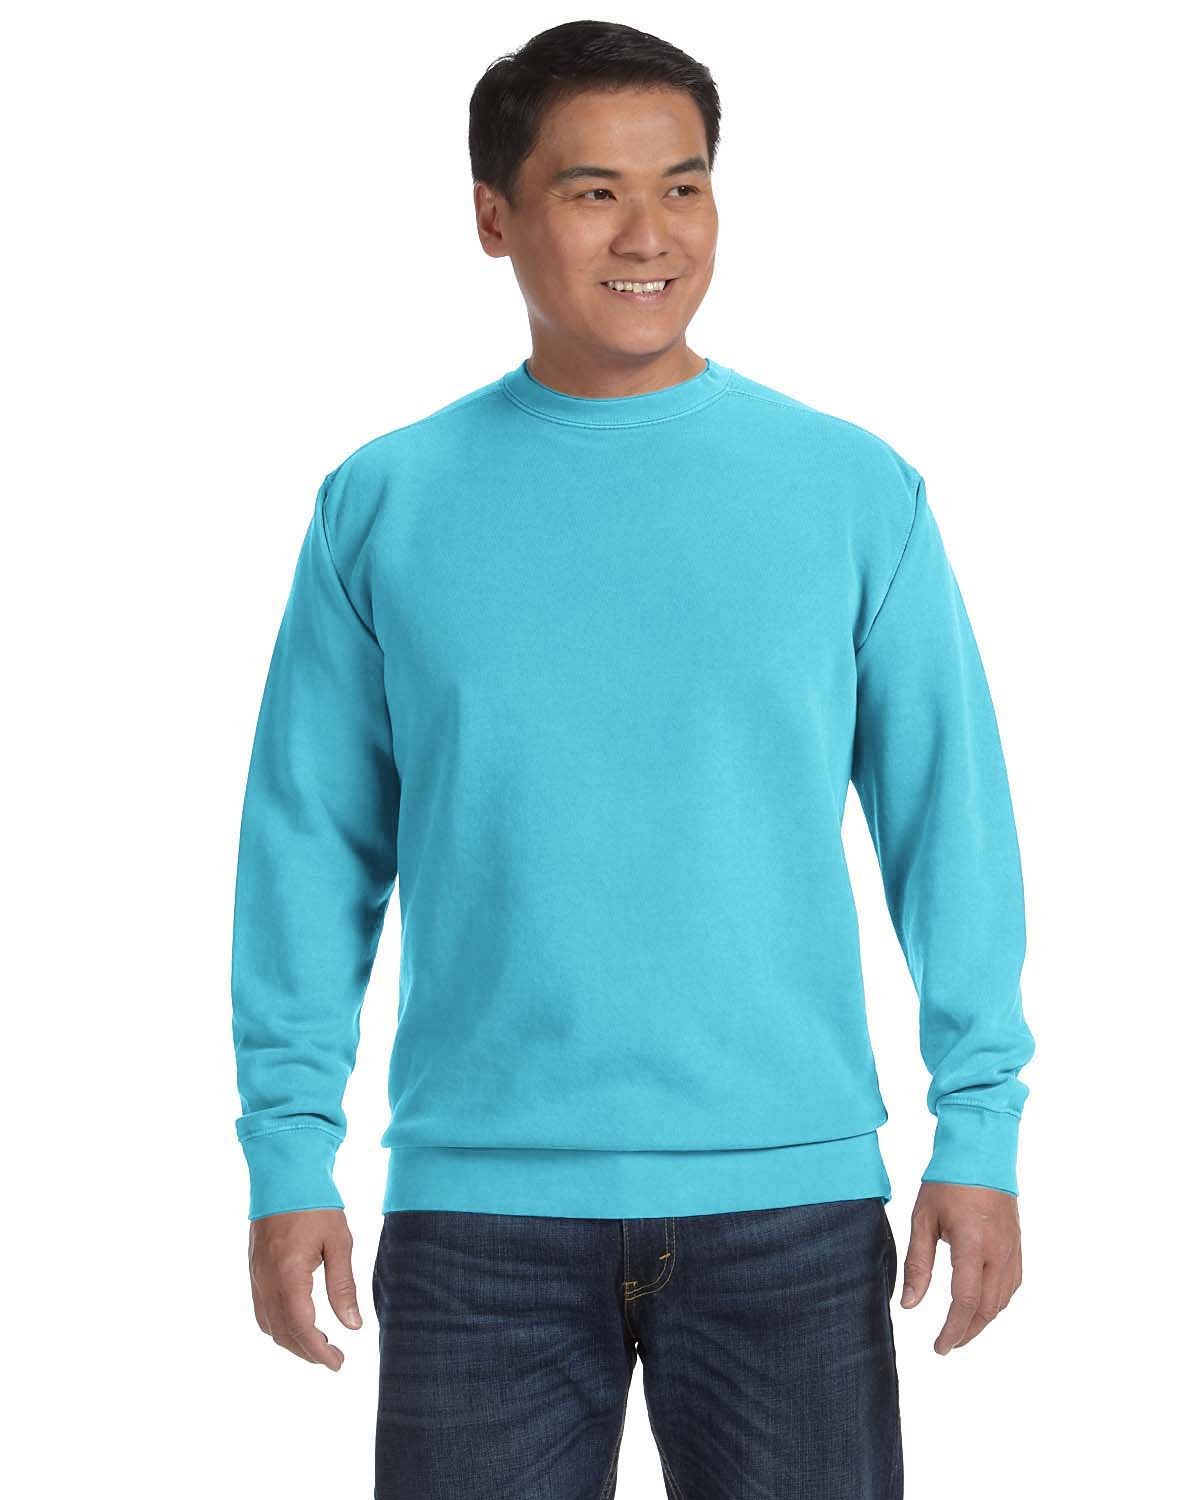 Adult Crewneck Sweatshirt-Comfort Colors